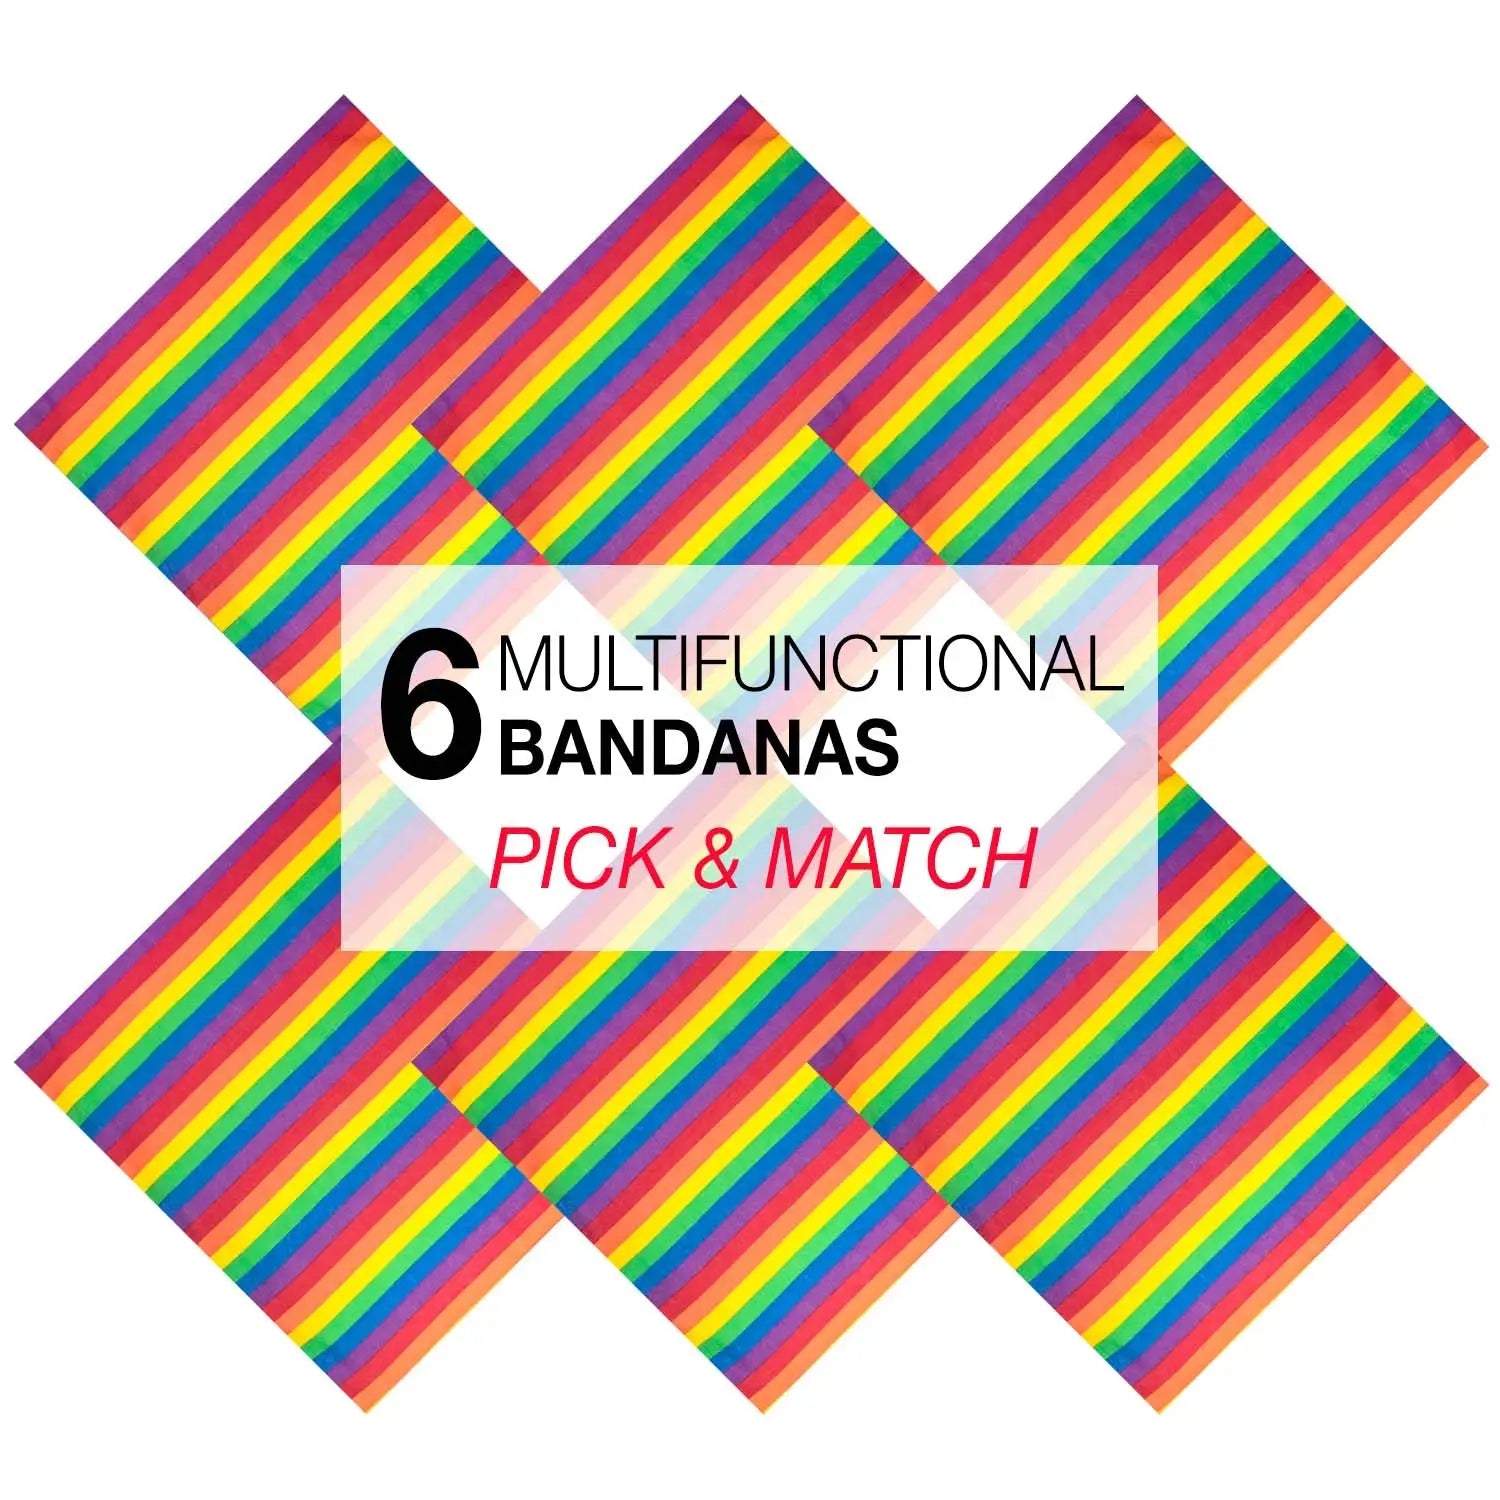 Pride rainbow flag bandana set displaying 6 functionals of the rainbow